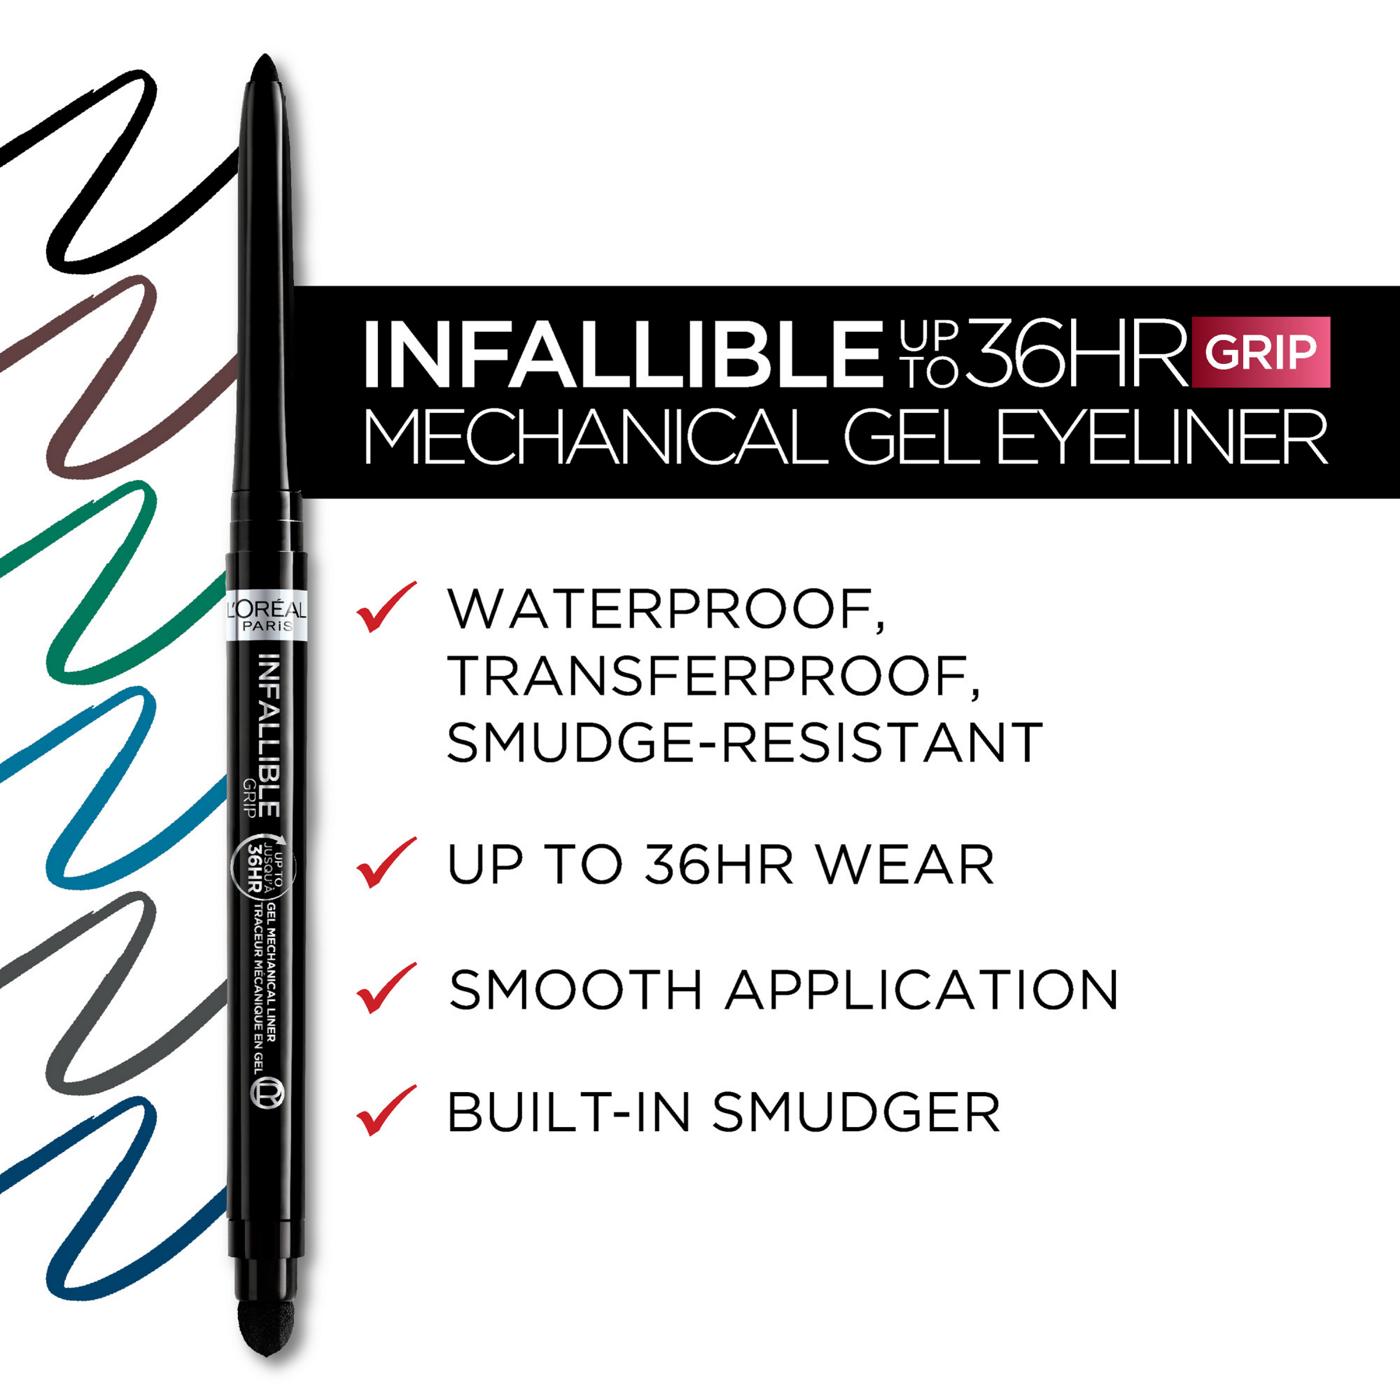 L'Oréal Paris Infallible Grip Mechanical Gel Eyeliner - Intense Black; image 3 of 7